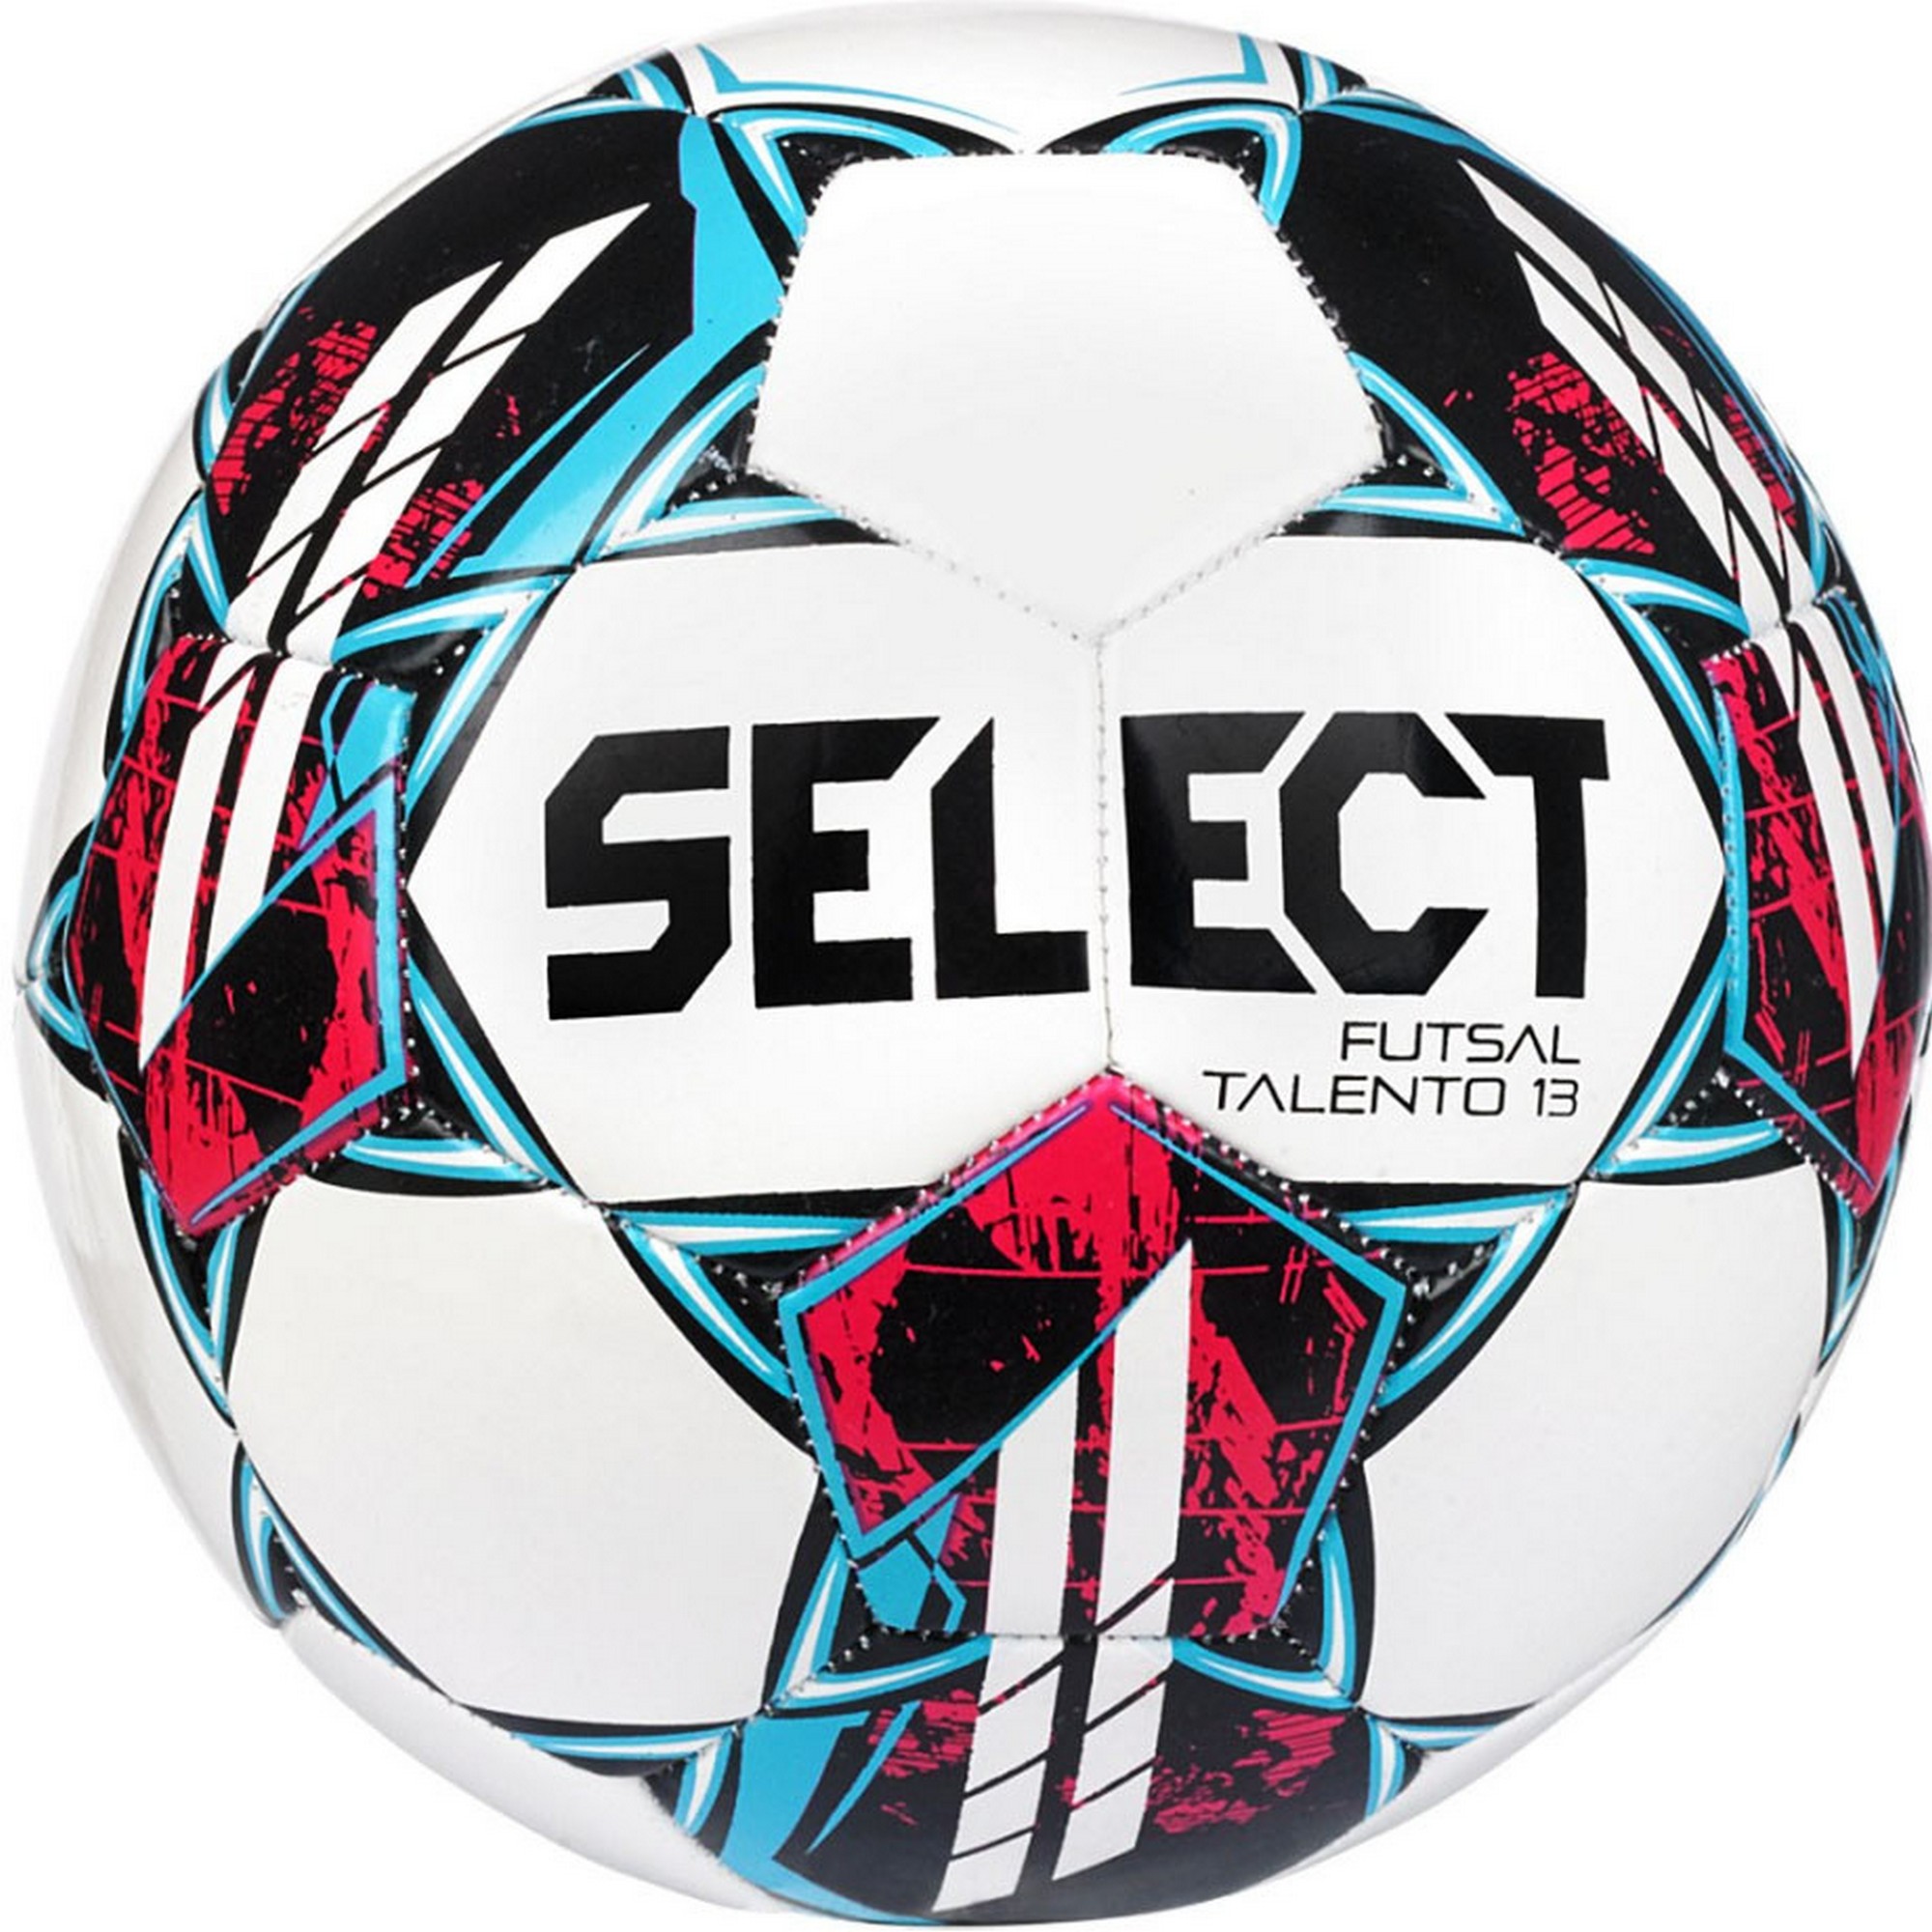   Select Futsal Talento 13 V22 1062460002 .3